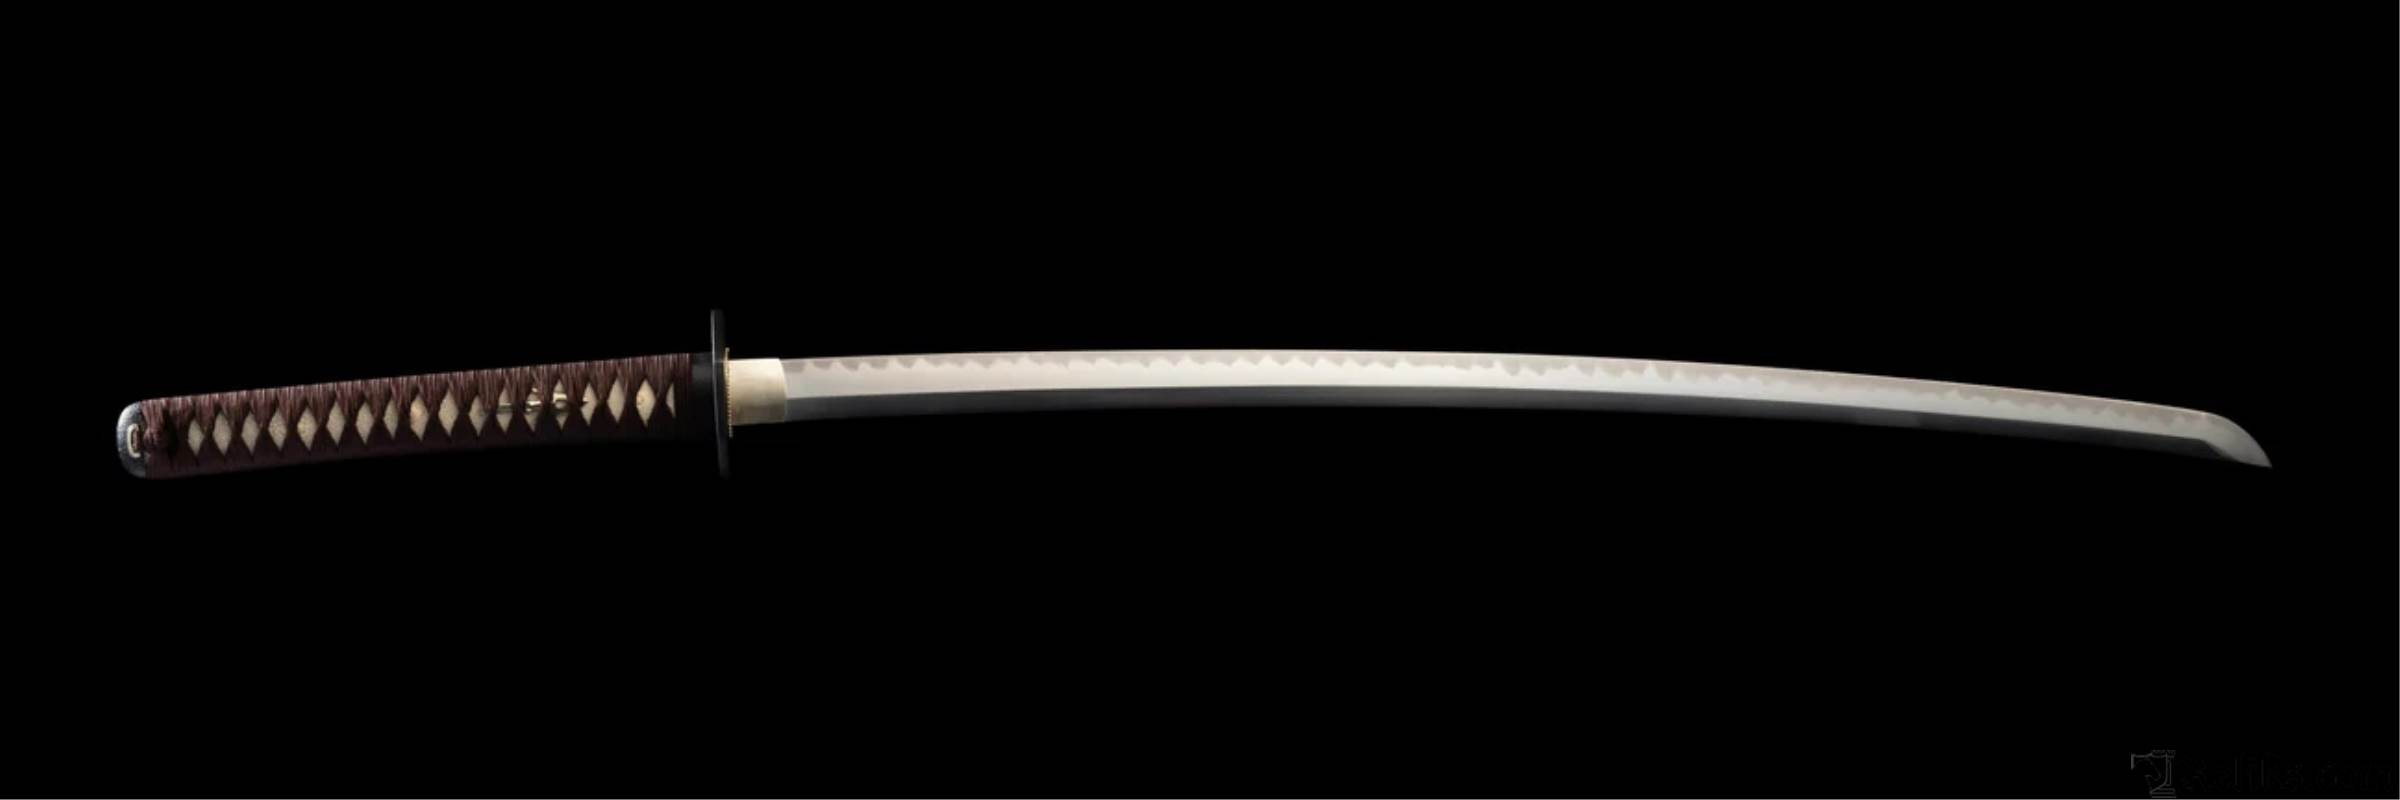 bugei armourers sword